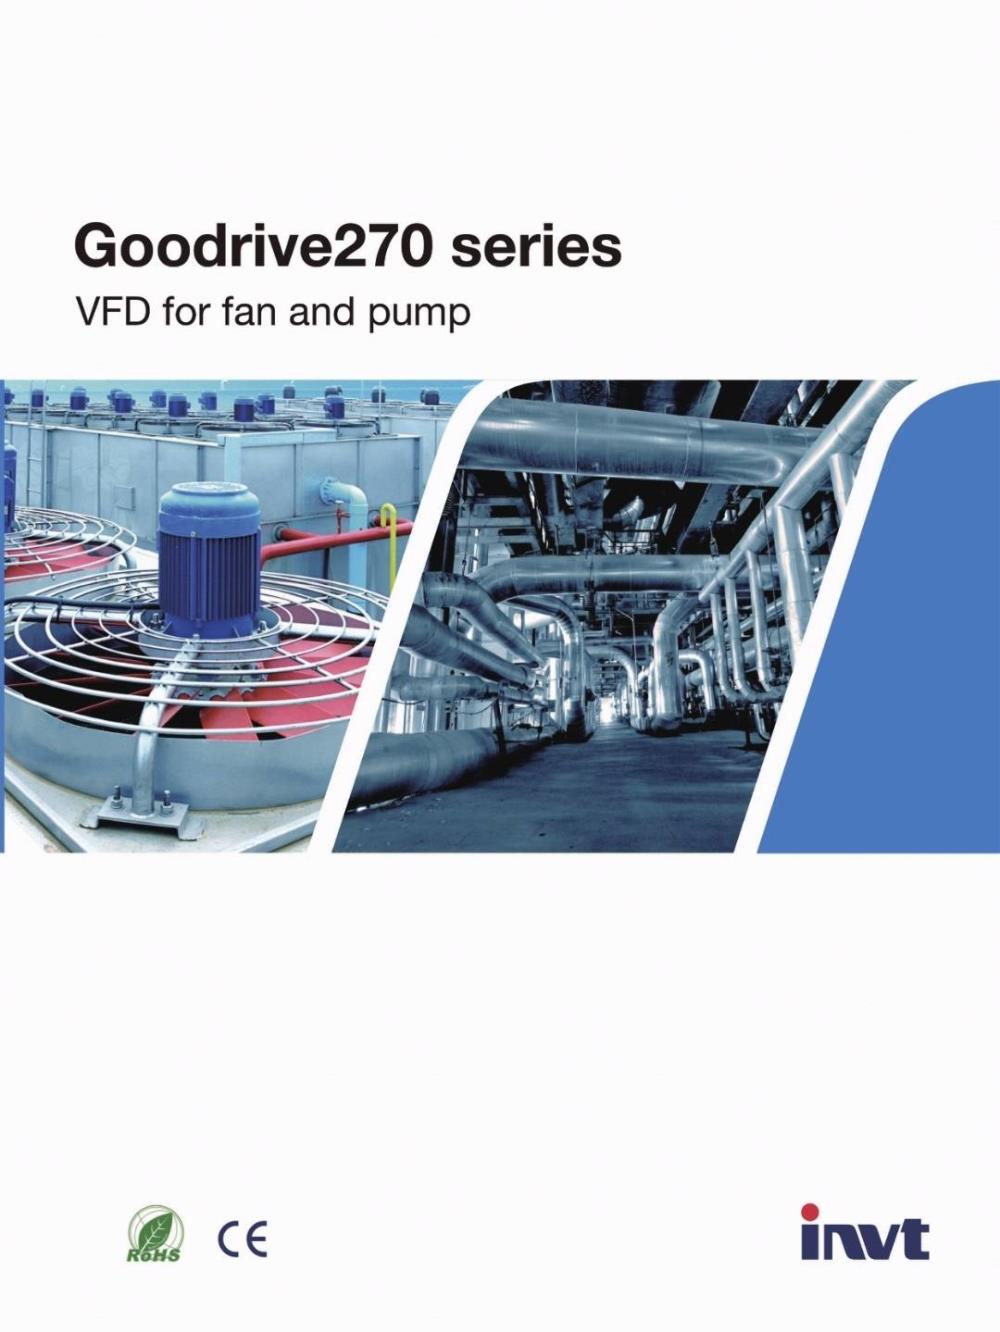 Inverter "INVT" GD270 Series